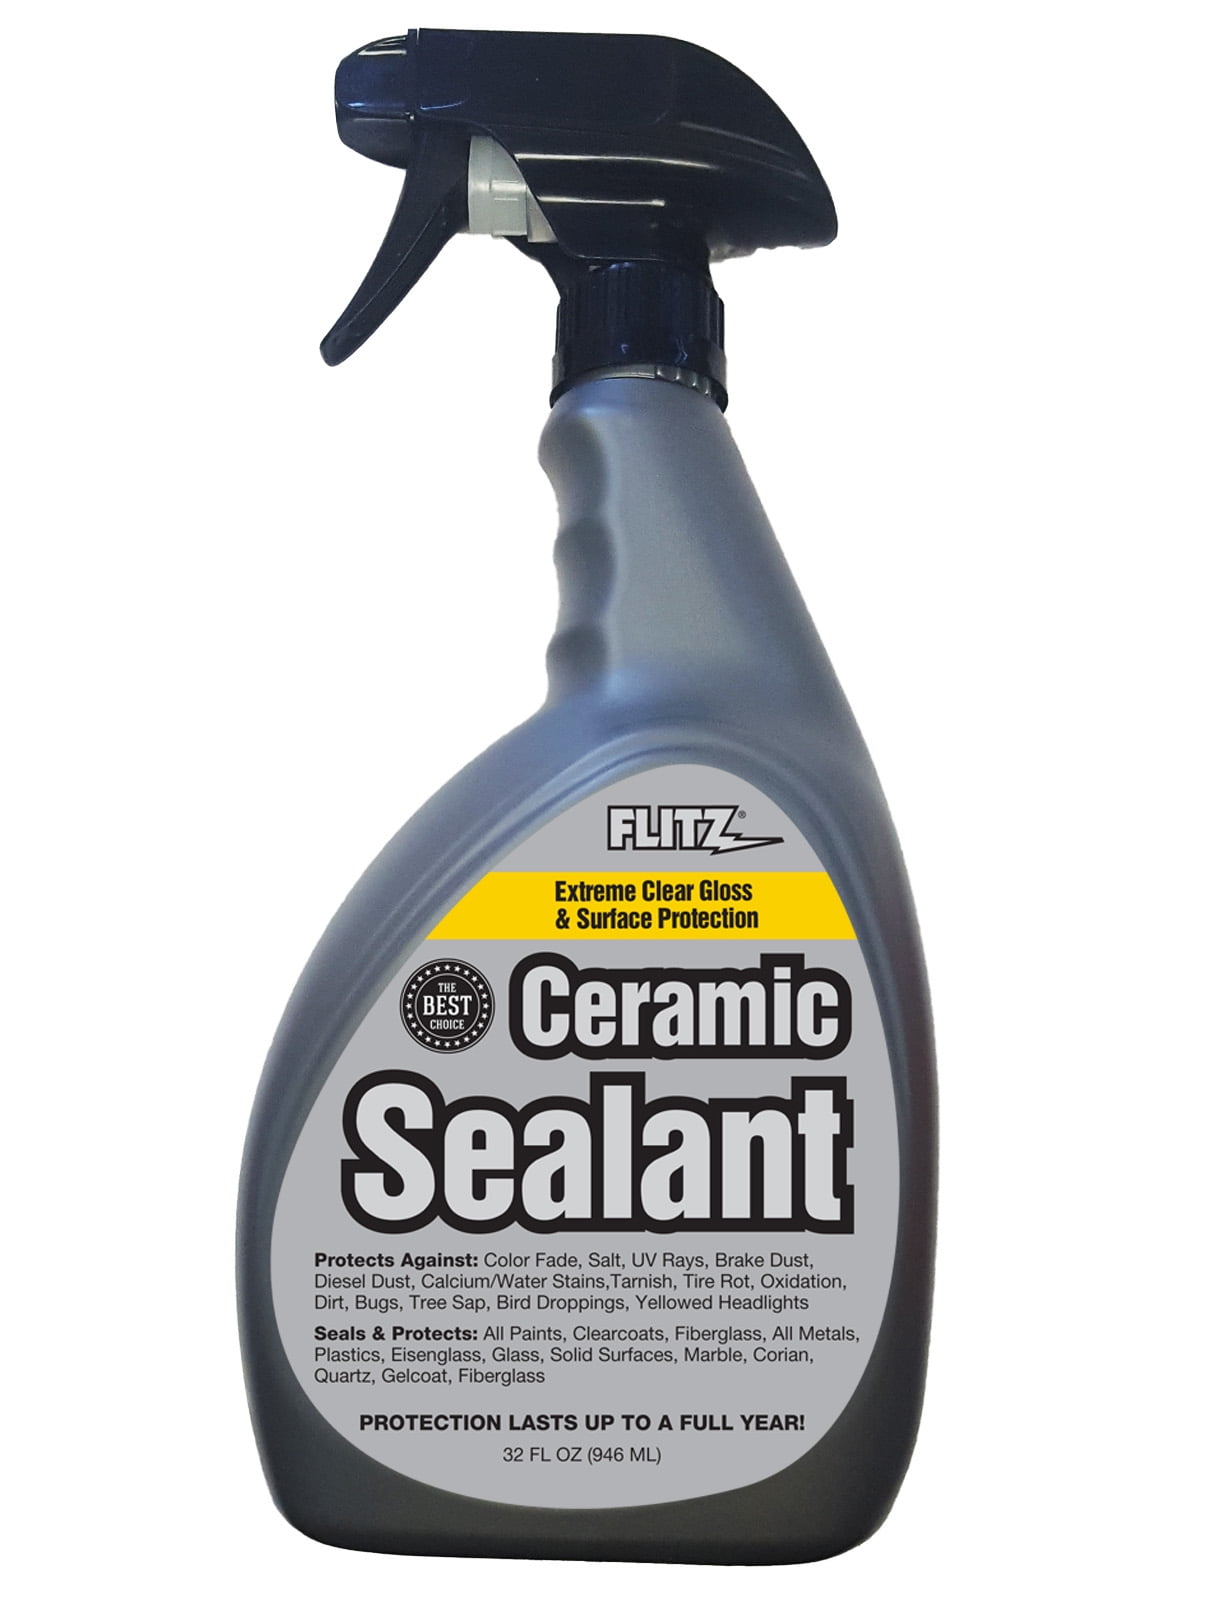 CERAKOTE® Rapid Ceramic Paint Sealant (12 Oz.) - Now 50% More With